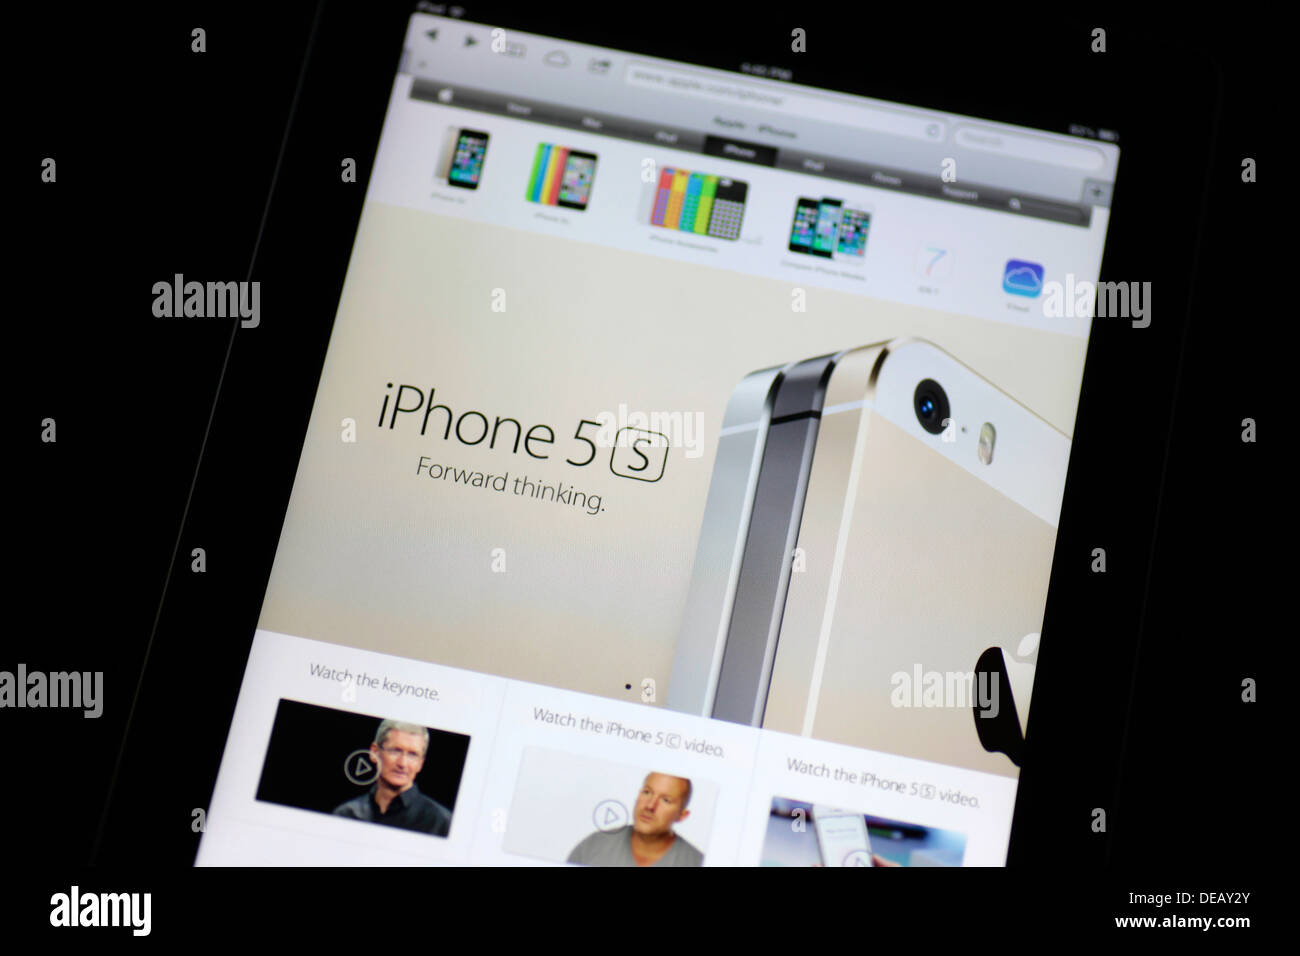 iPhone 5s web-page displayed in an Apple iPad Stock Photo